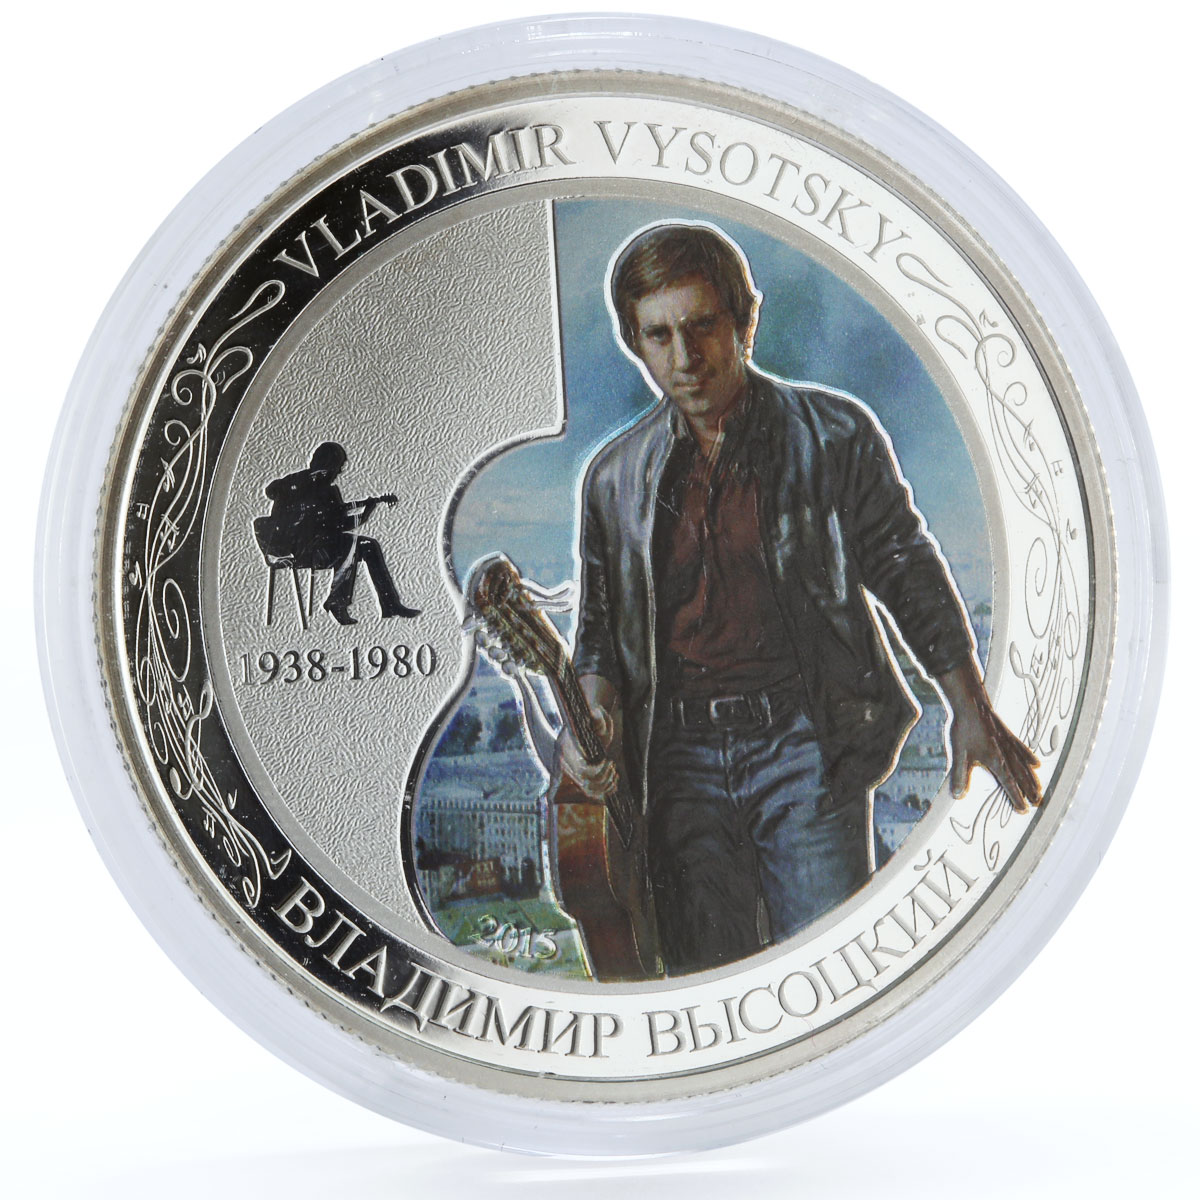 Benin 1000 francs Vladimir Vysotsky colored proof silver coin 2015